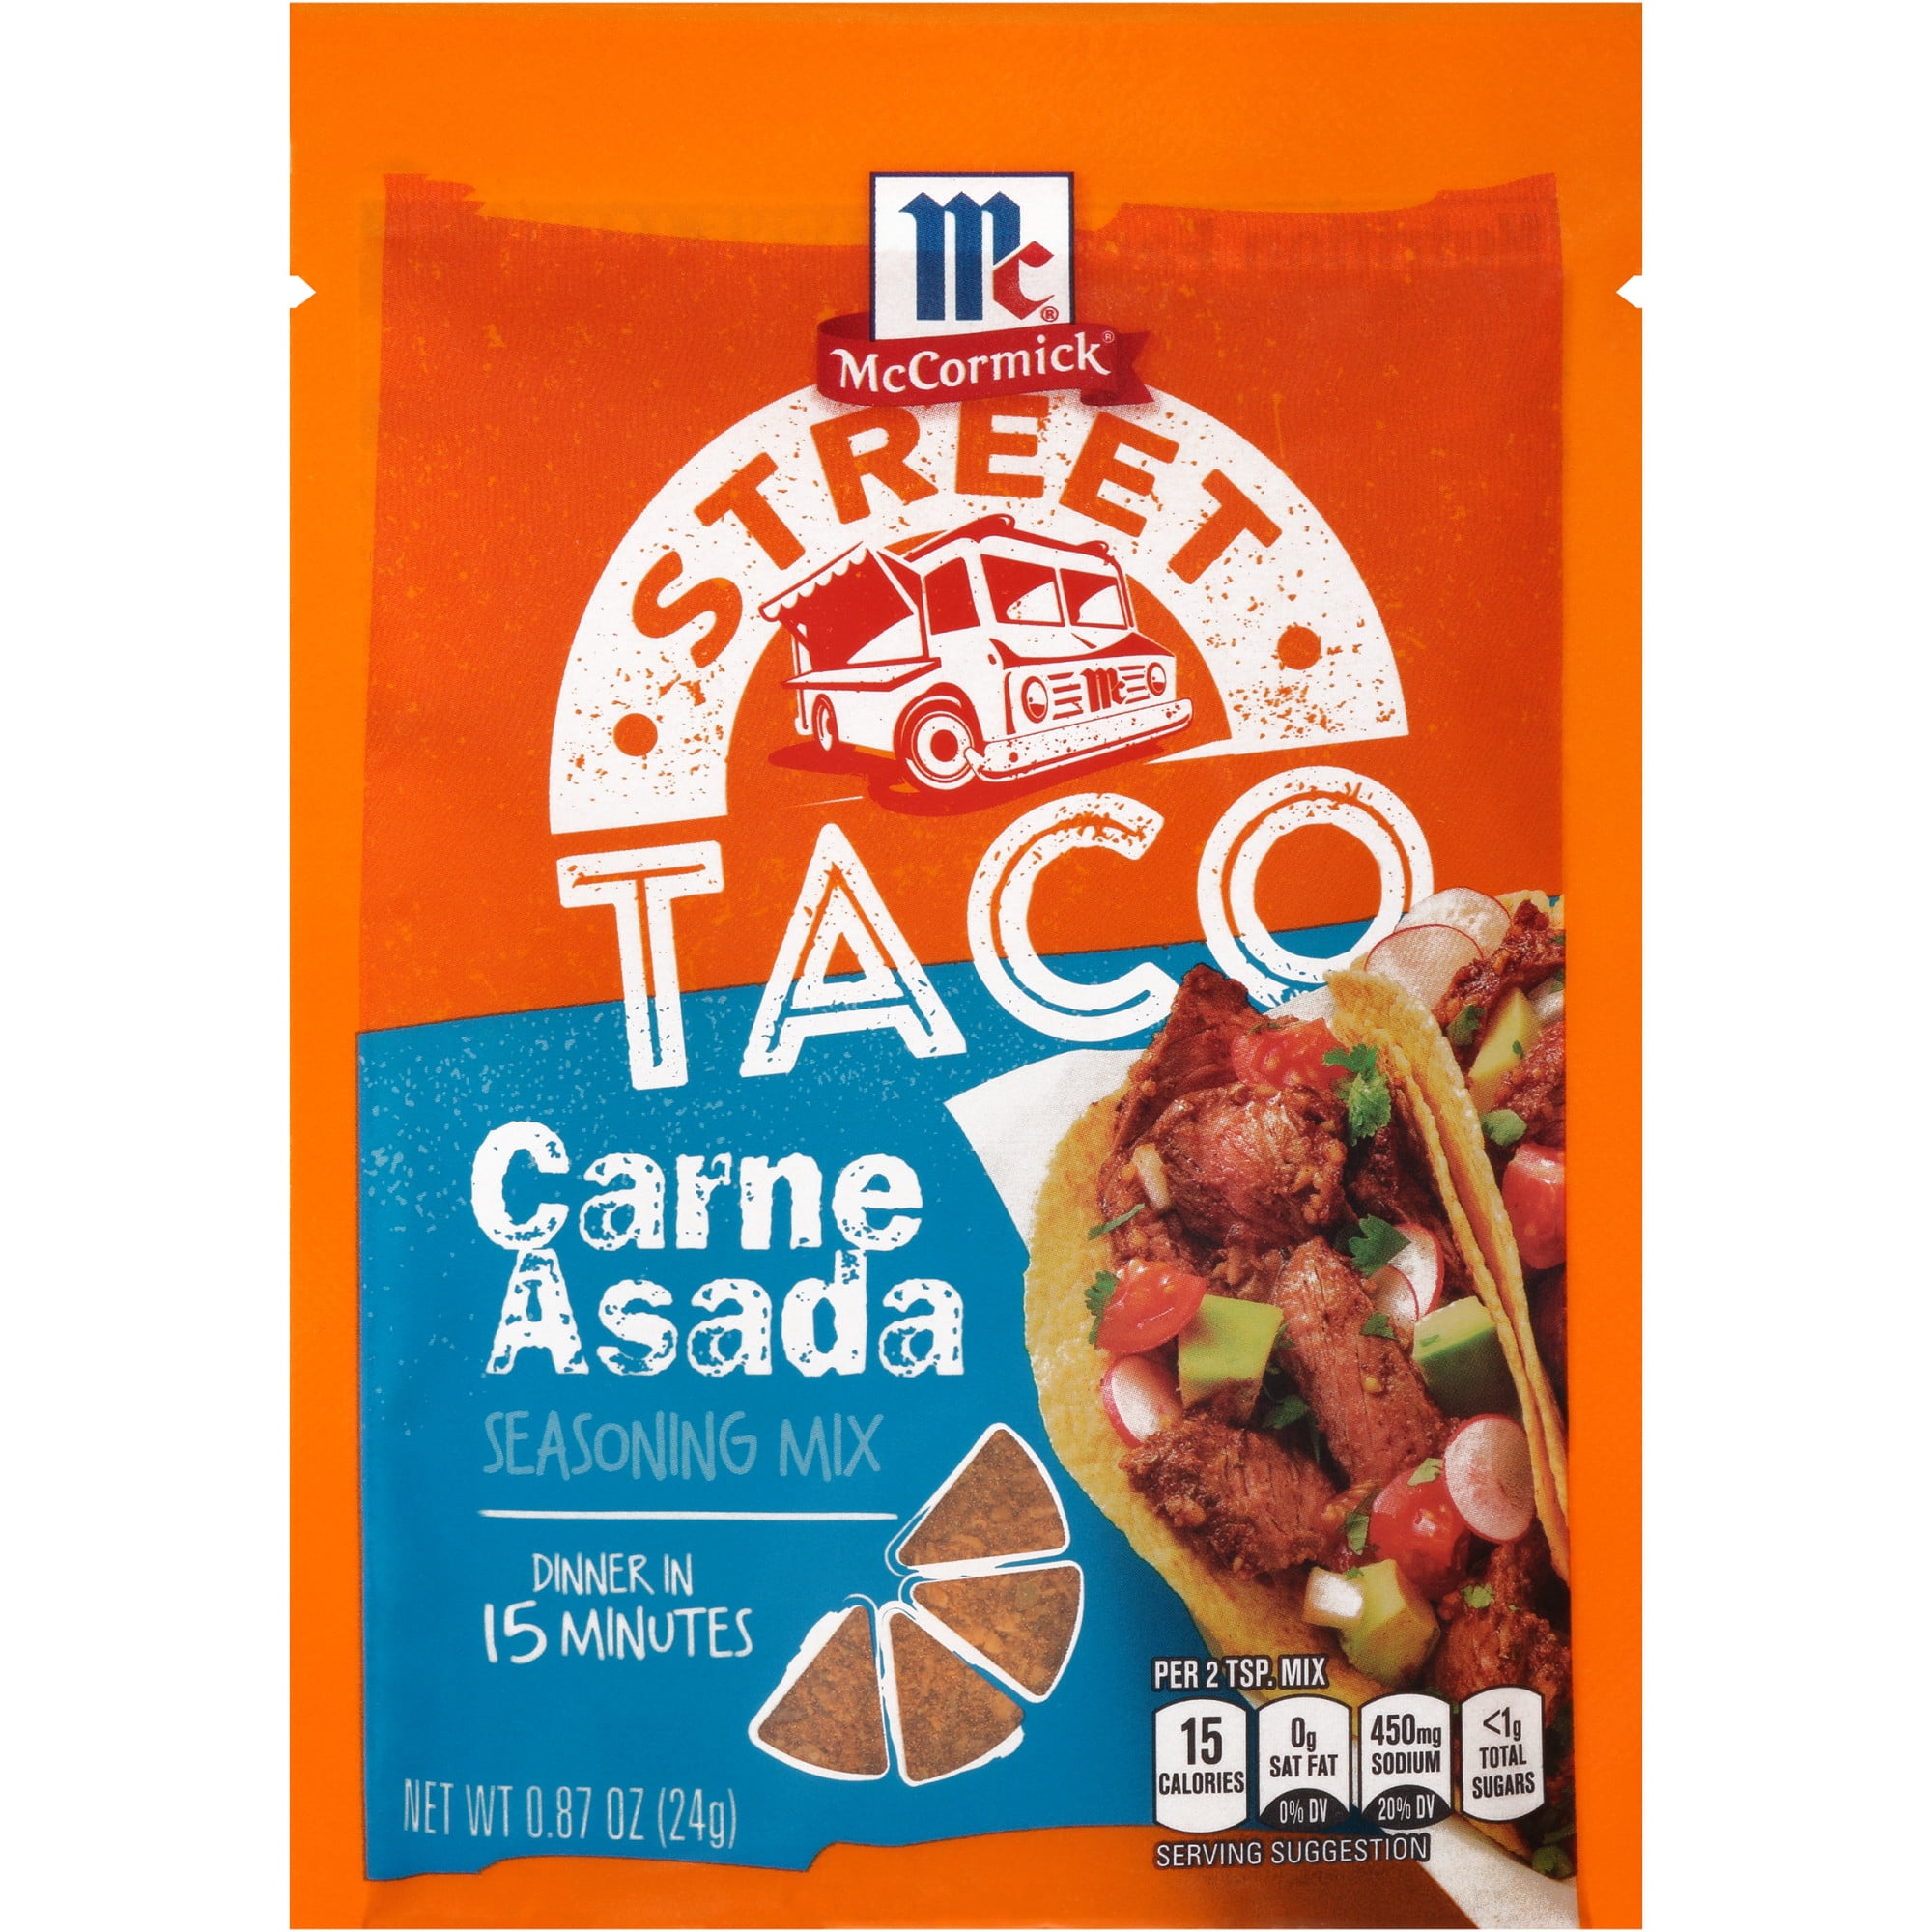 McCormick Taco Seasoning Mix - Carne Asada, 0.87 oz